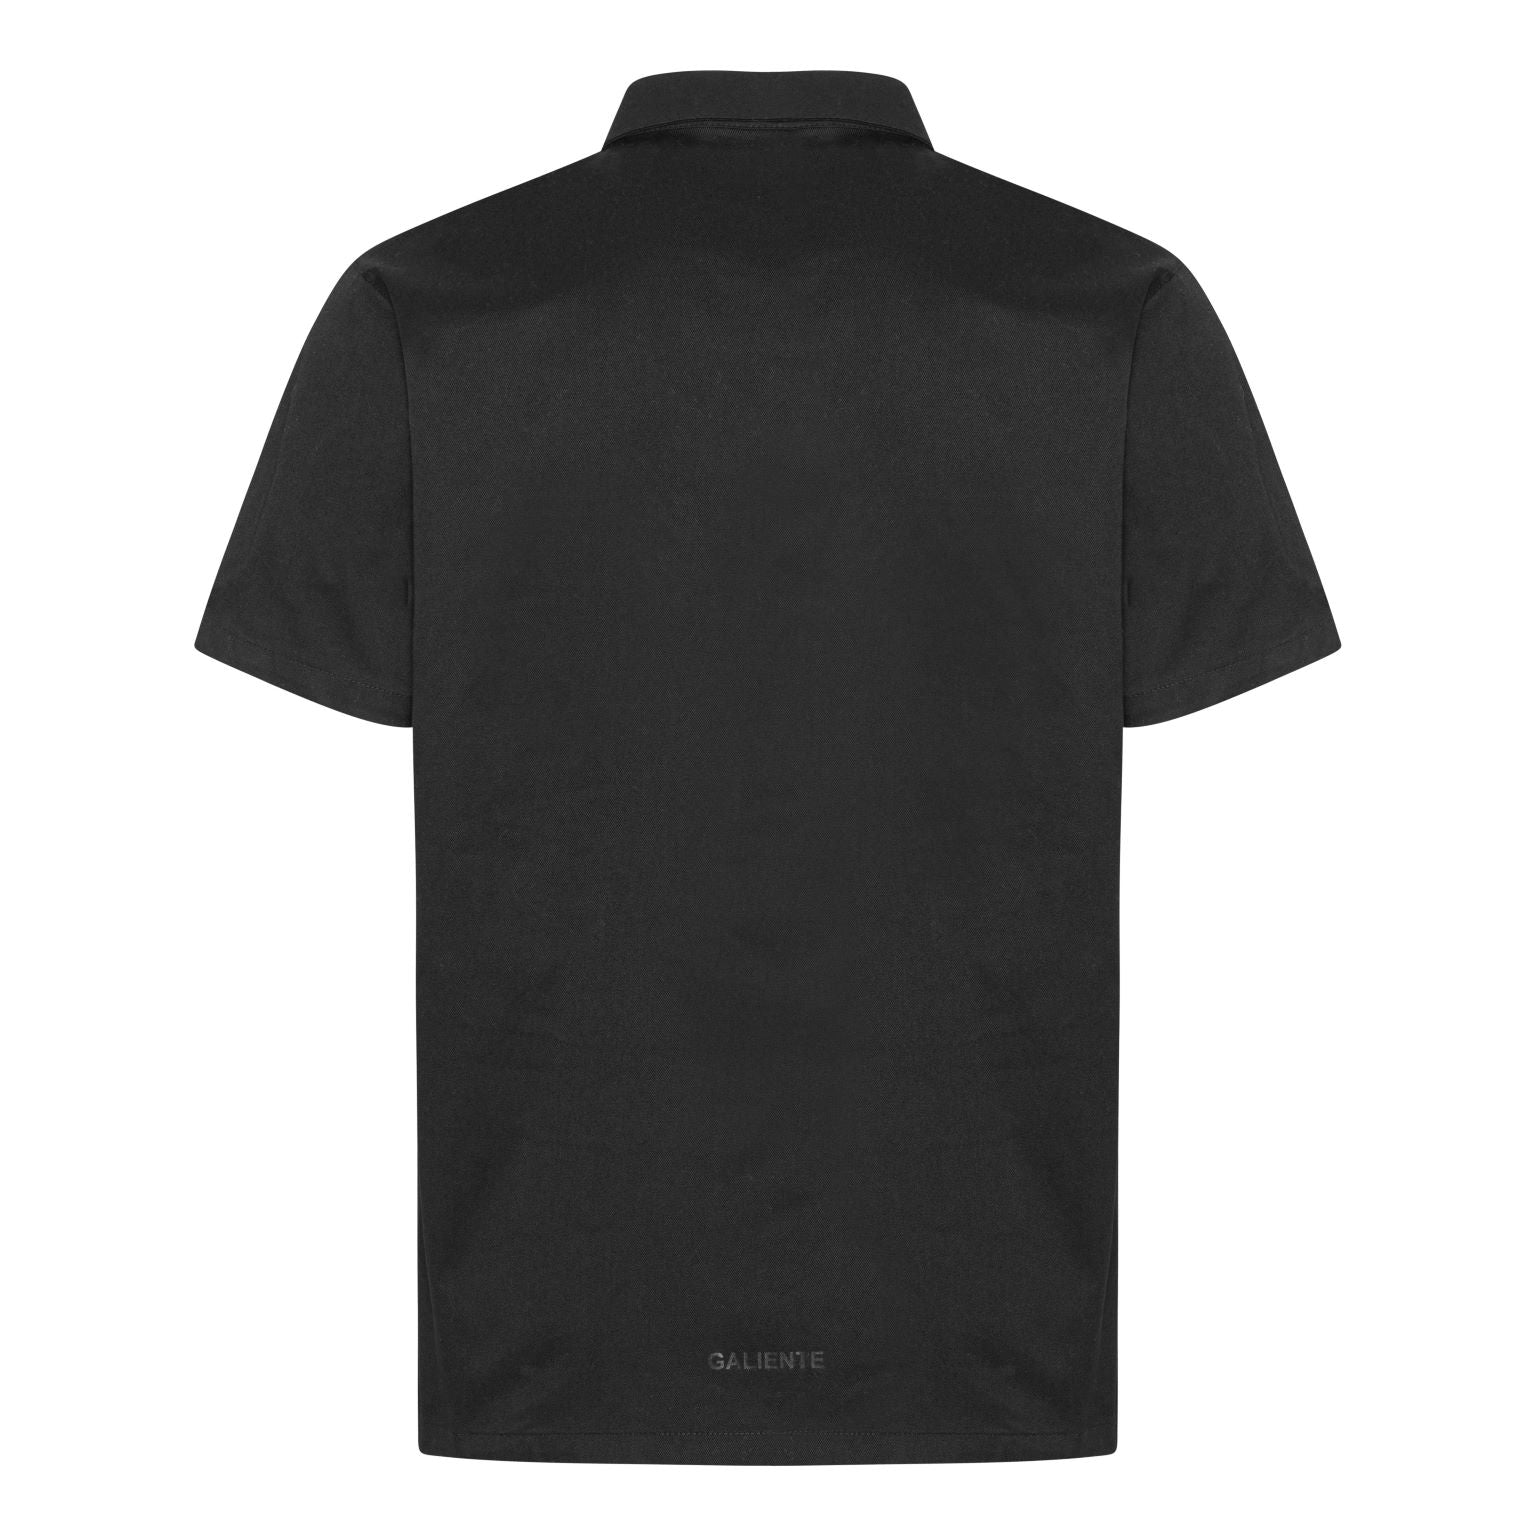 Short-sleeved black cargo shirt